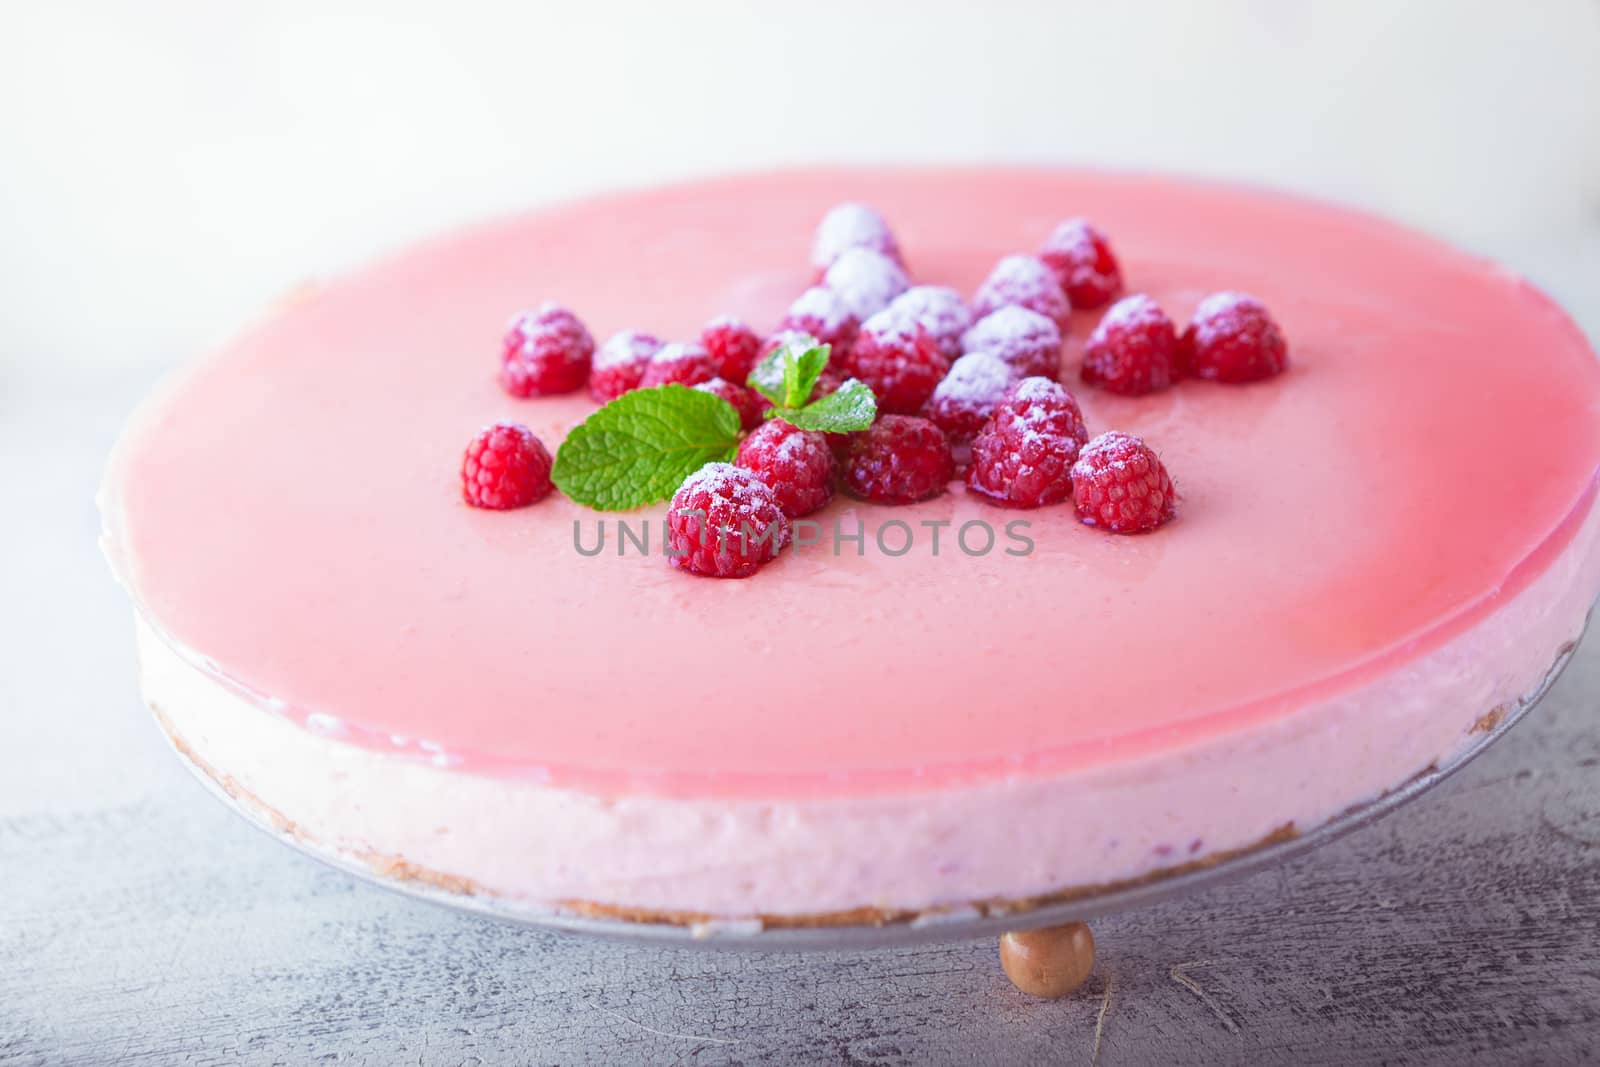 Raspberry yogurt cake with berries on the top.